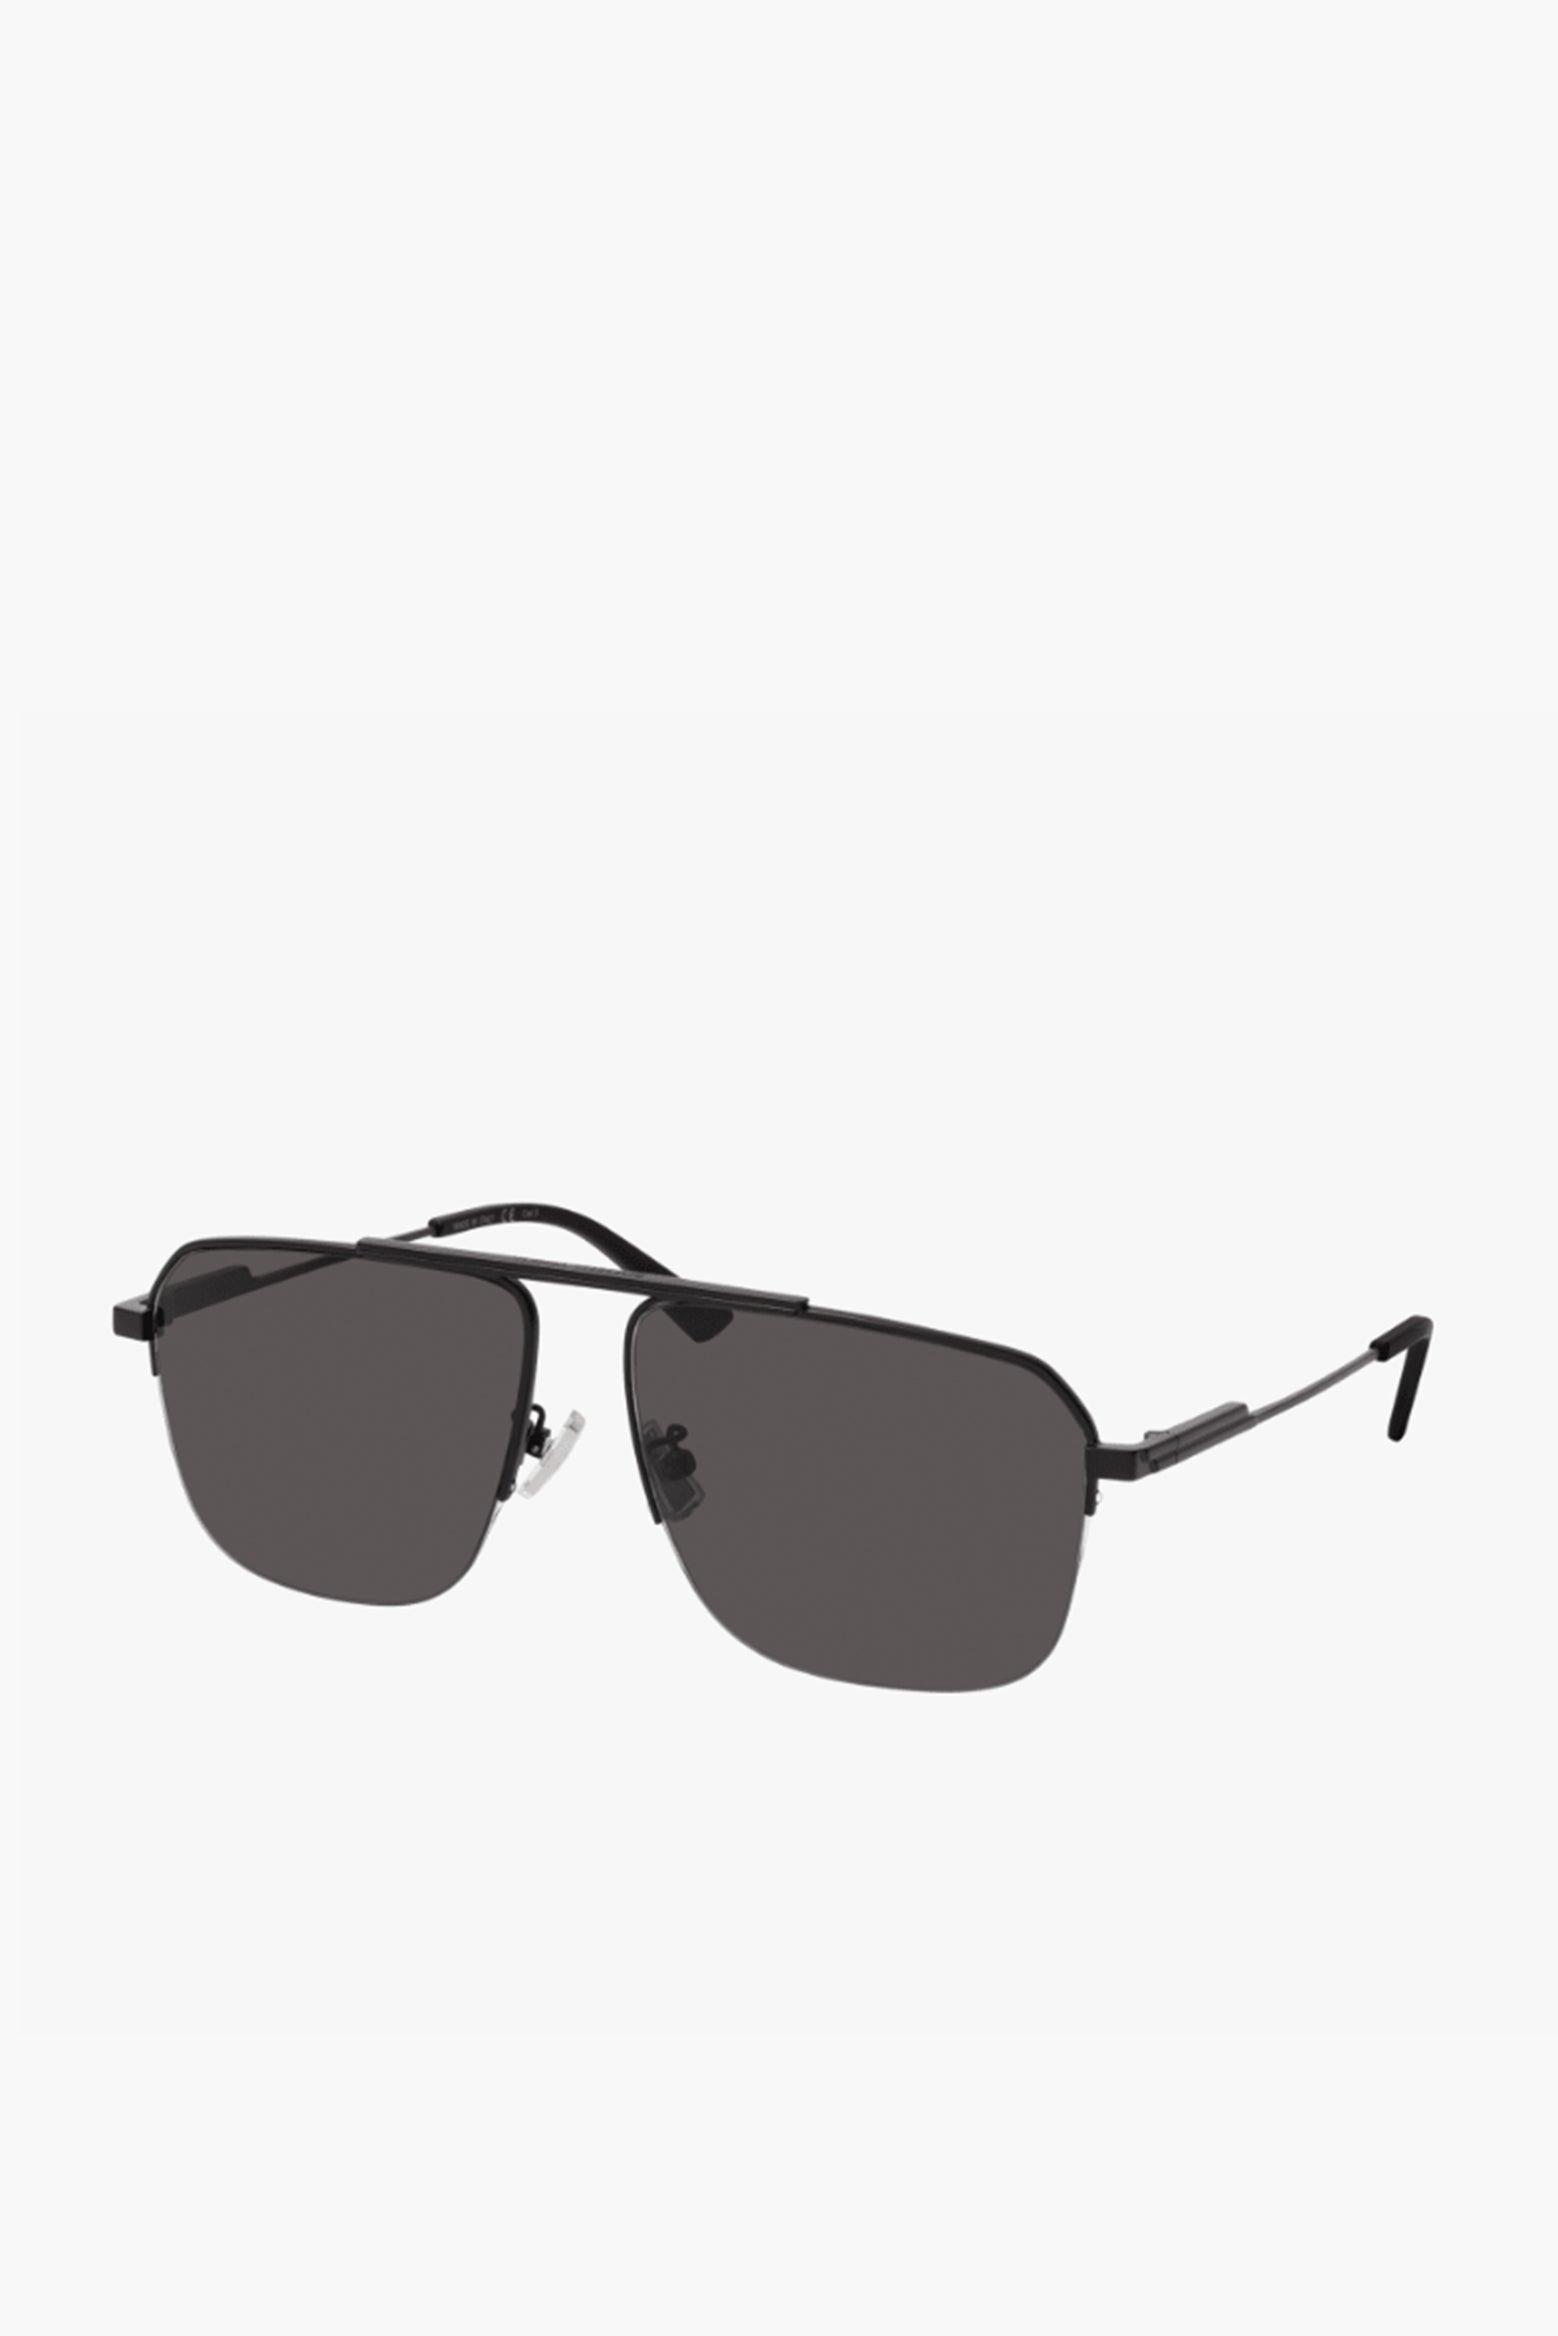 Bottega Veneta Metal Aviator Sunglasses in Black available at The New Trend Australia.